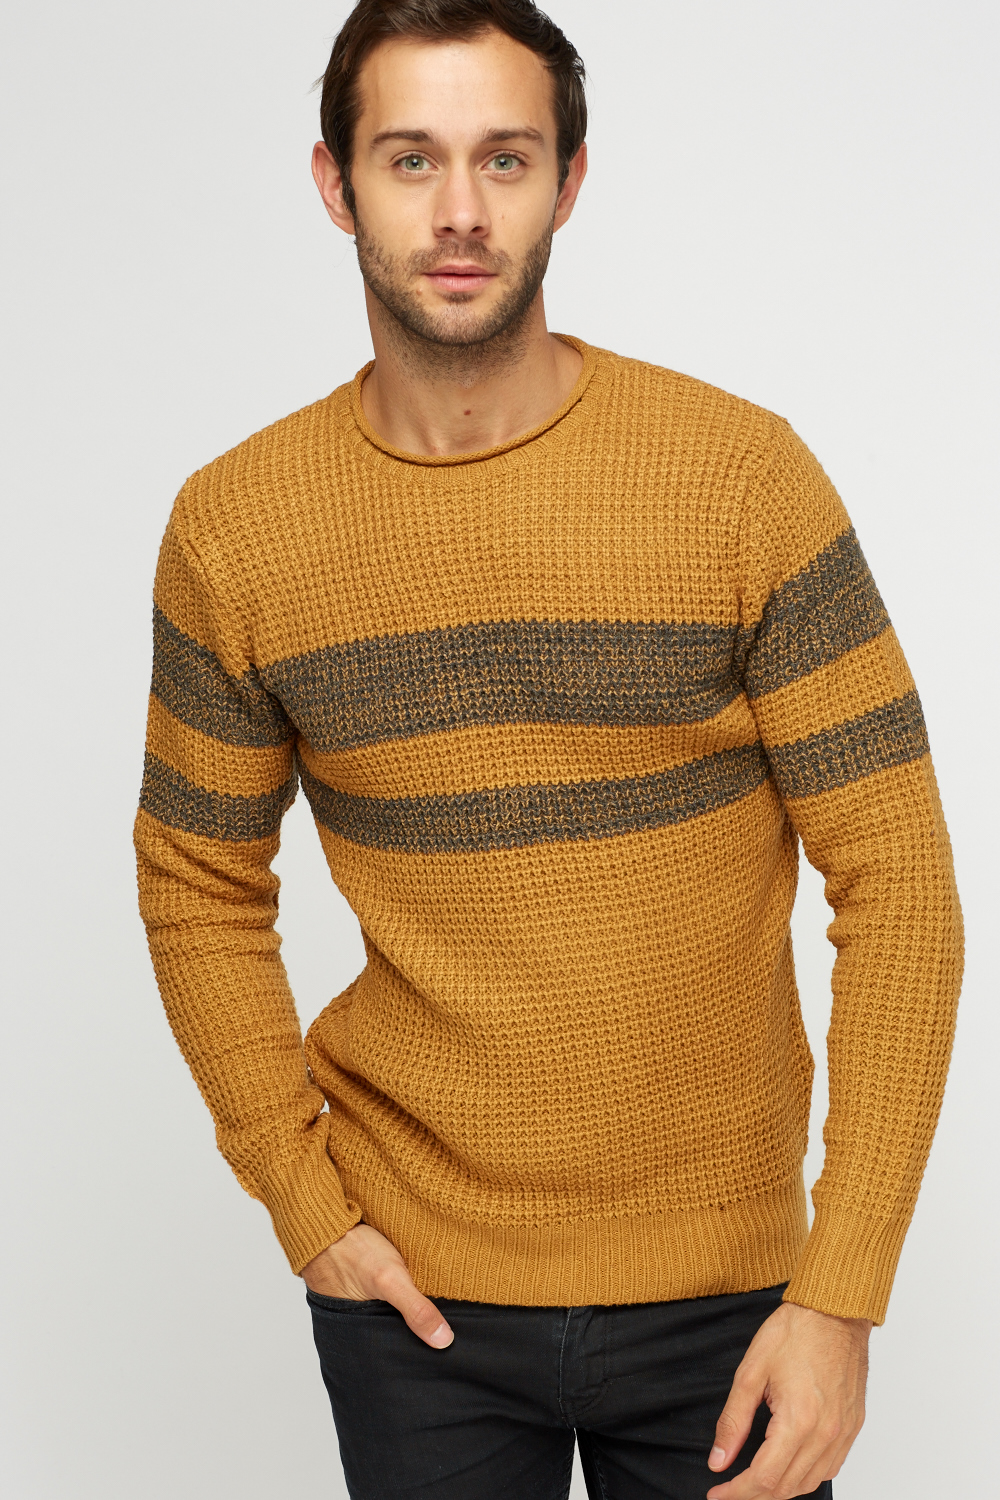 Mustard Striped Knitted Jumper - Just $7